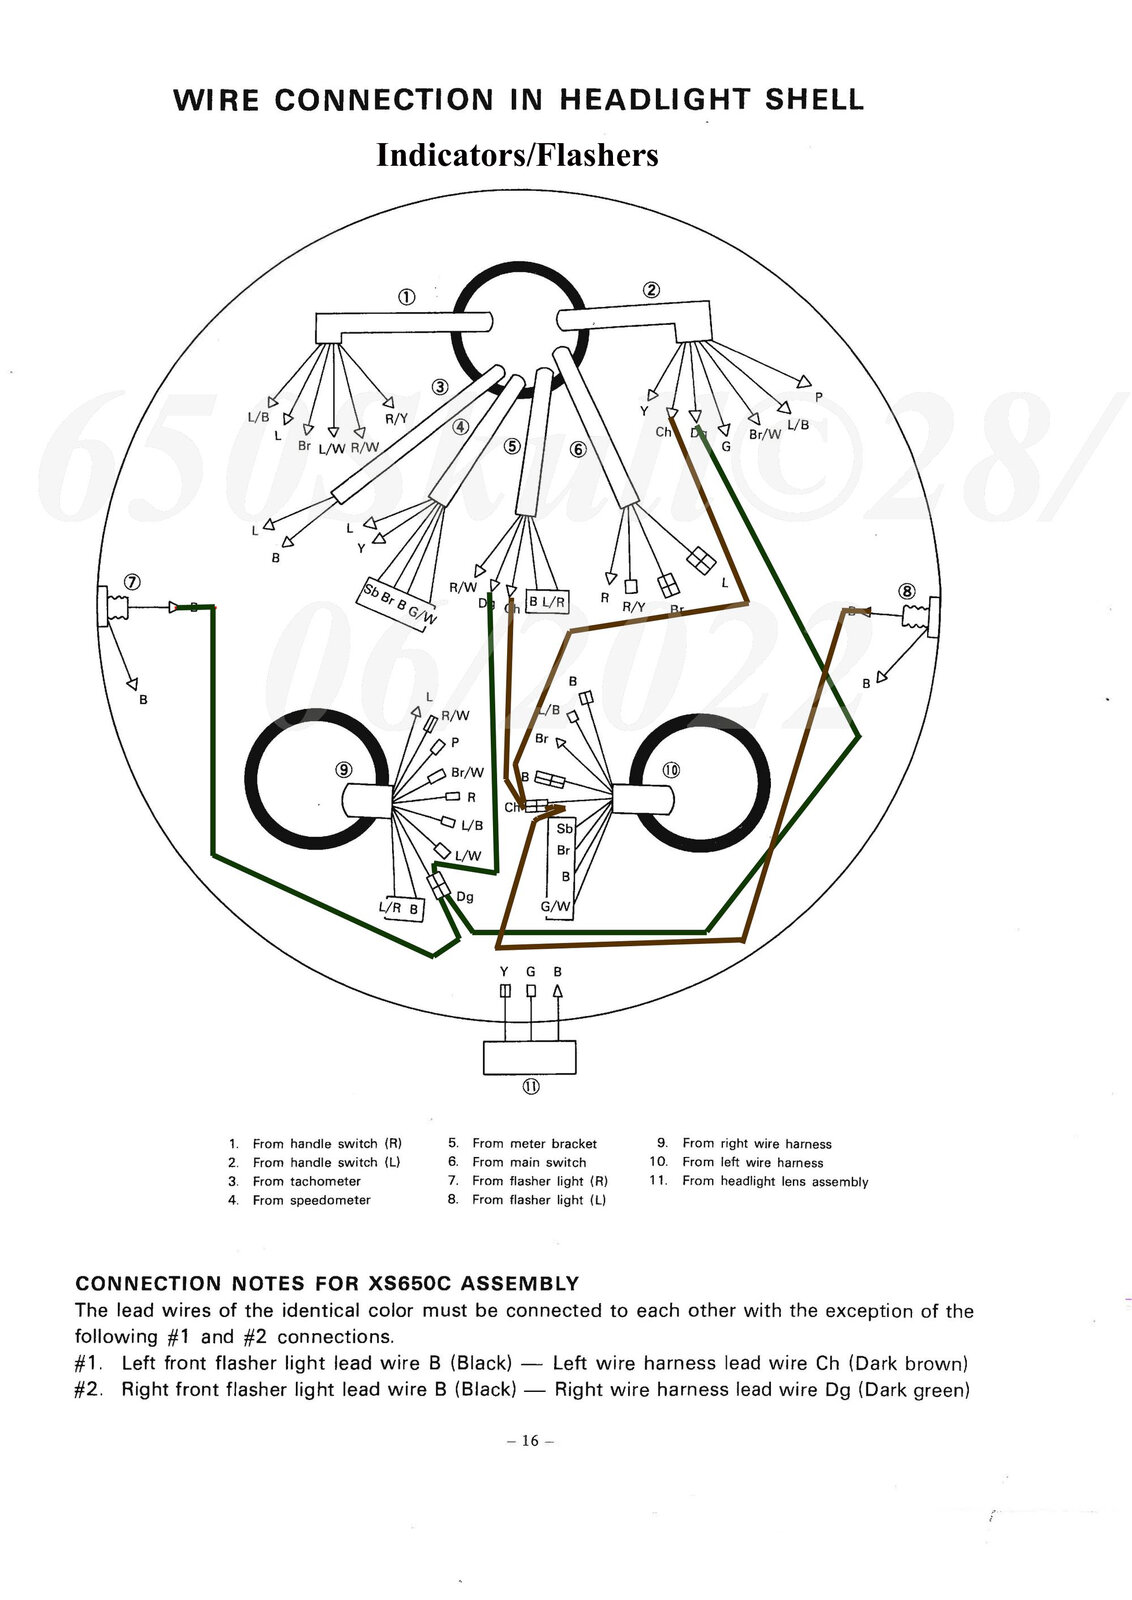 76C Assembly manual - parts  Manualt19 19 copyright.jpg